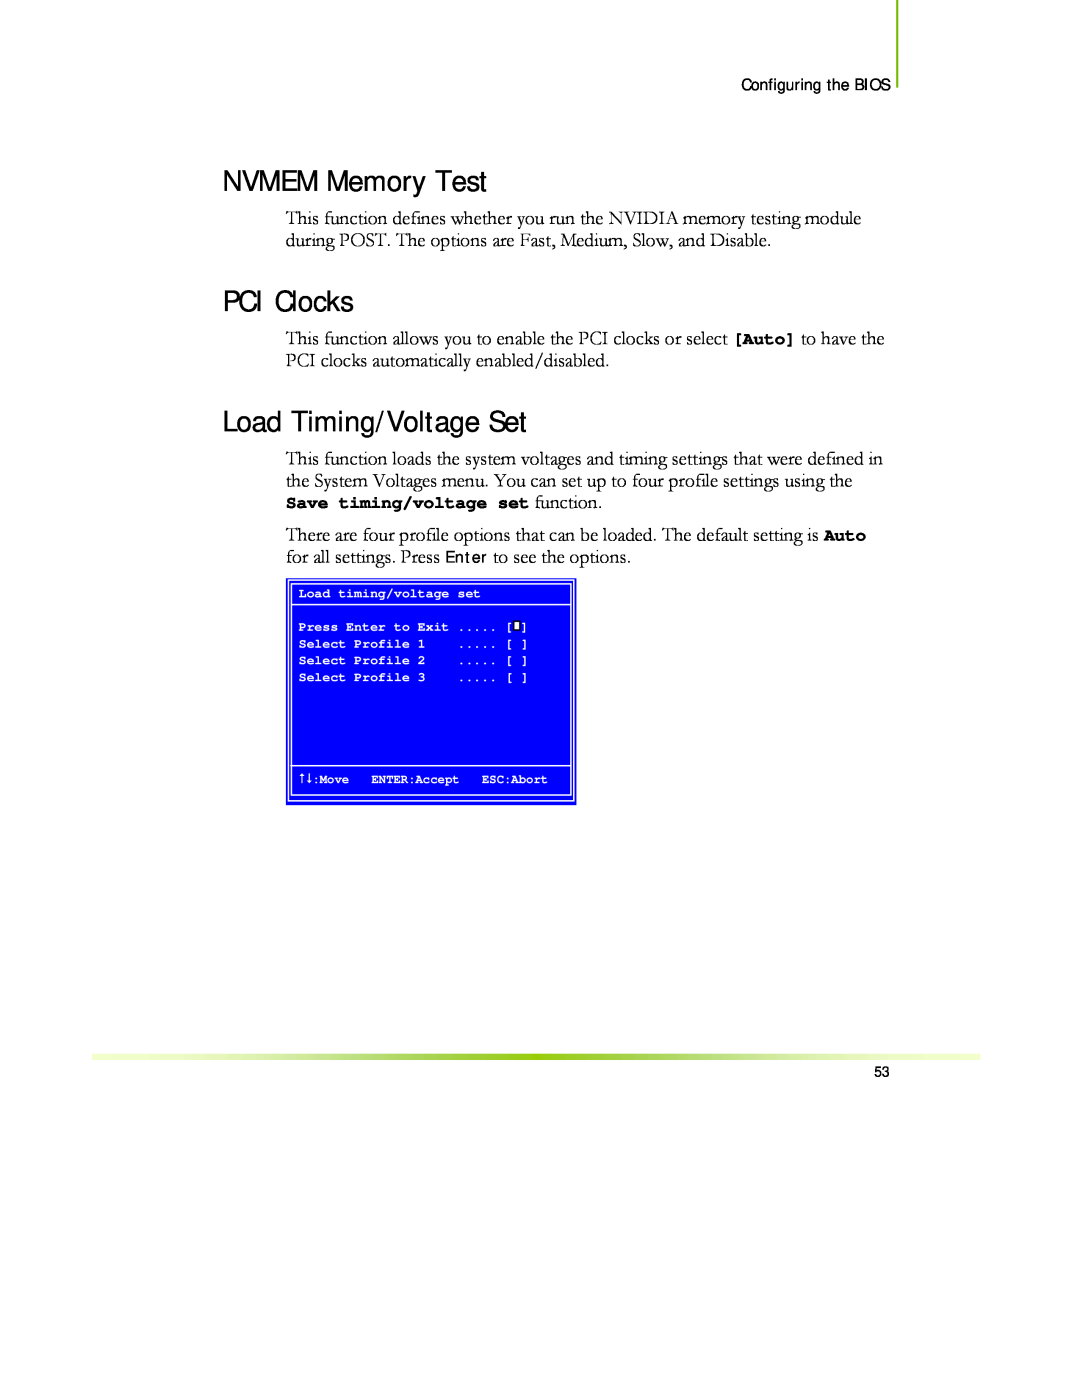 EVGA 122-CK-NF68-XX manual NVMEM Memory Test, PCI Clocks, Load Timing/Voltage Set 